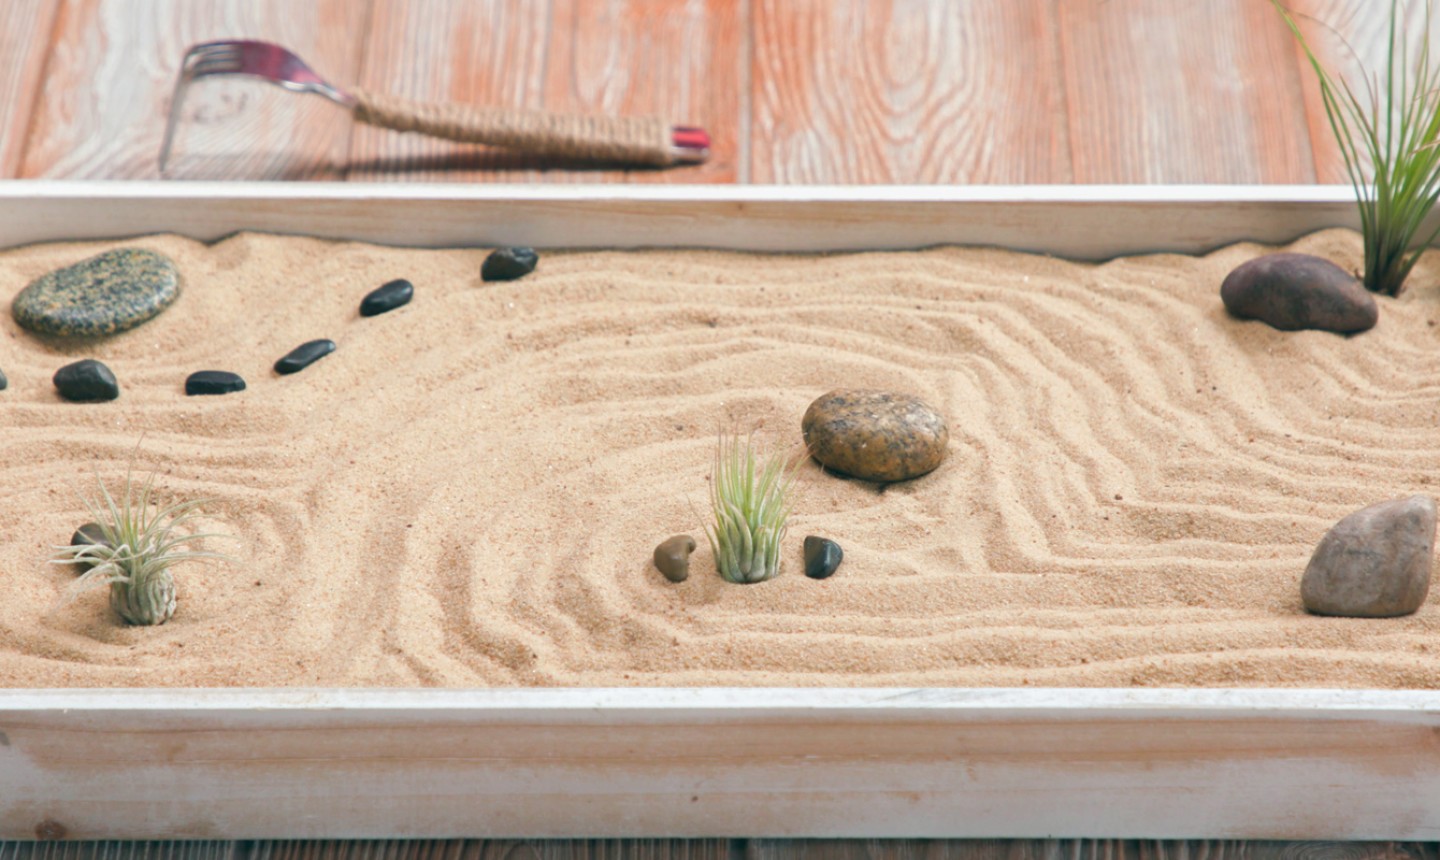 Find Your Chill With A Diy Zen Garden Craftsy